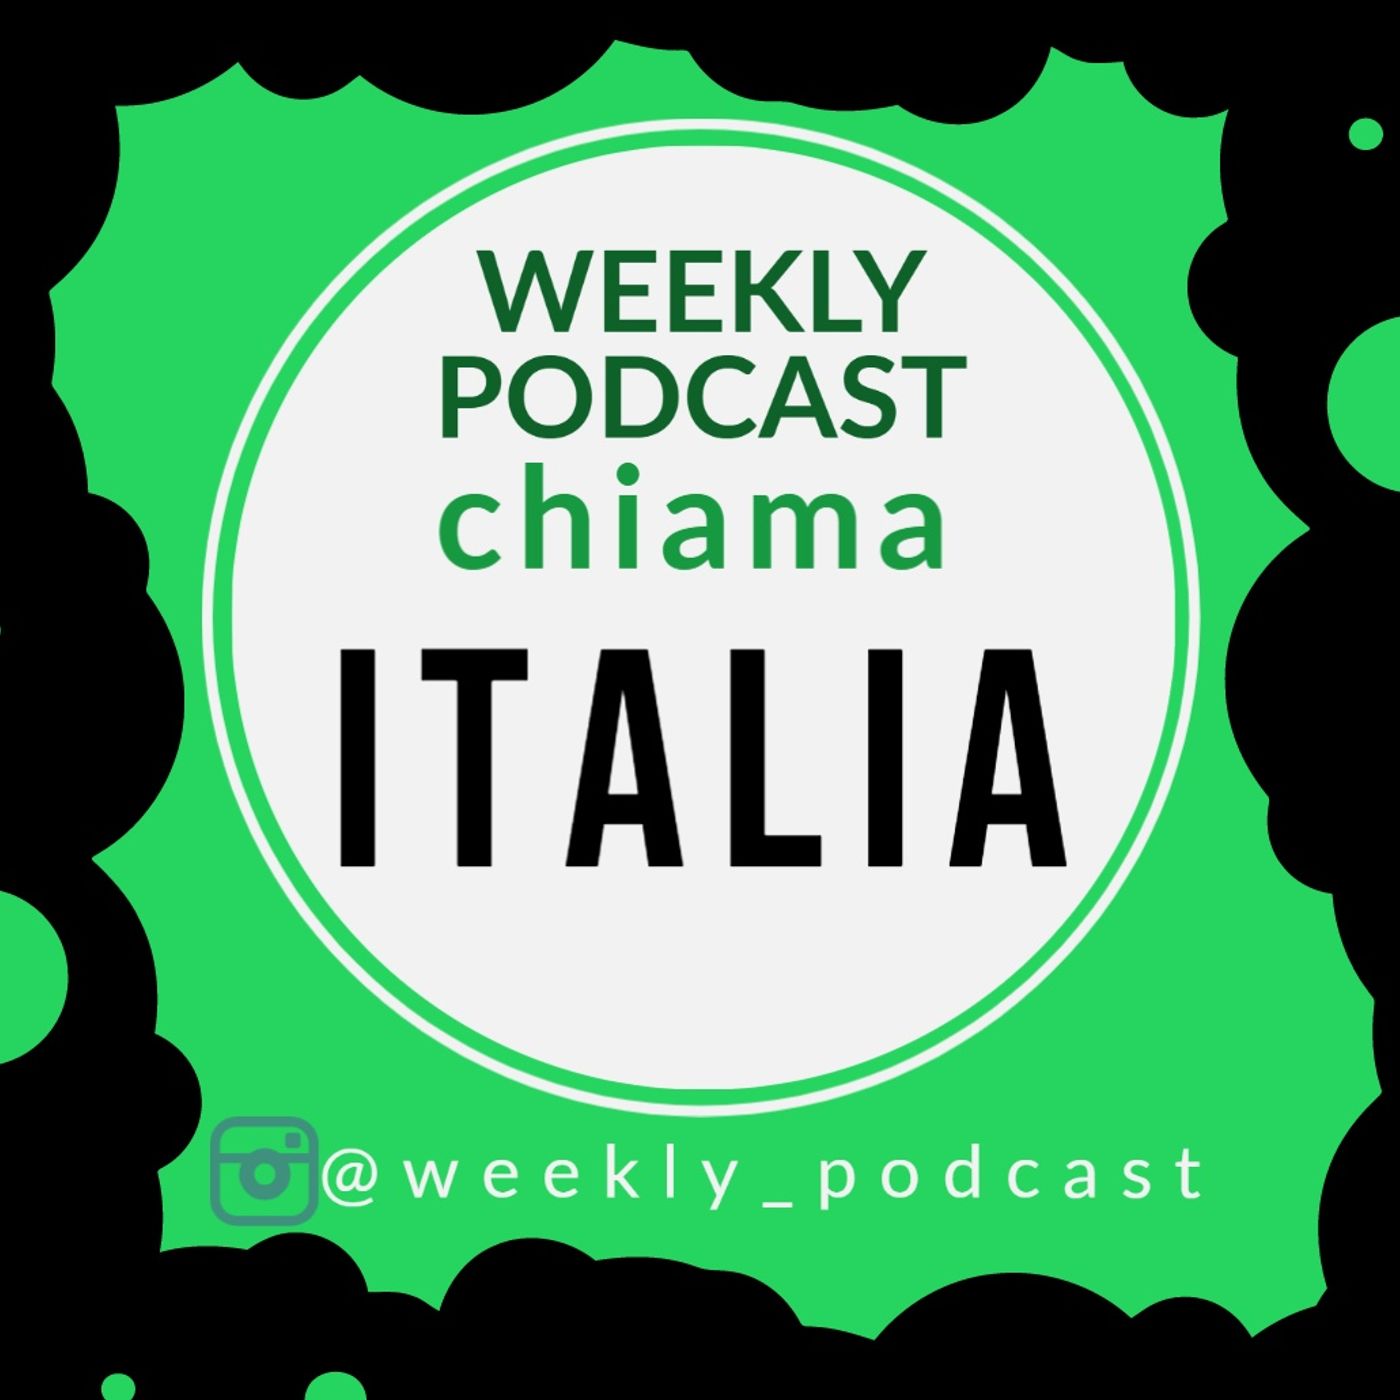 WeeklyPodcast Chiama Italia ep0 : Lavinia.